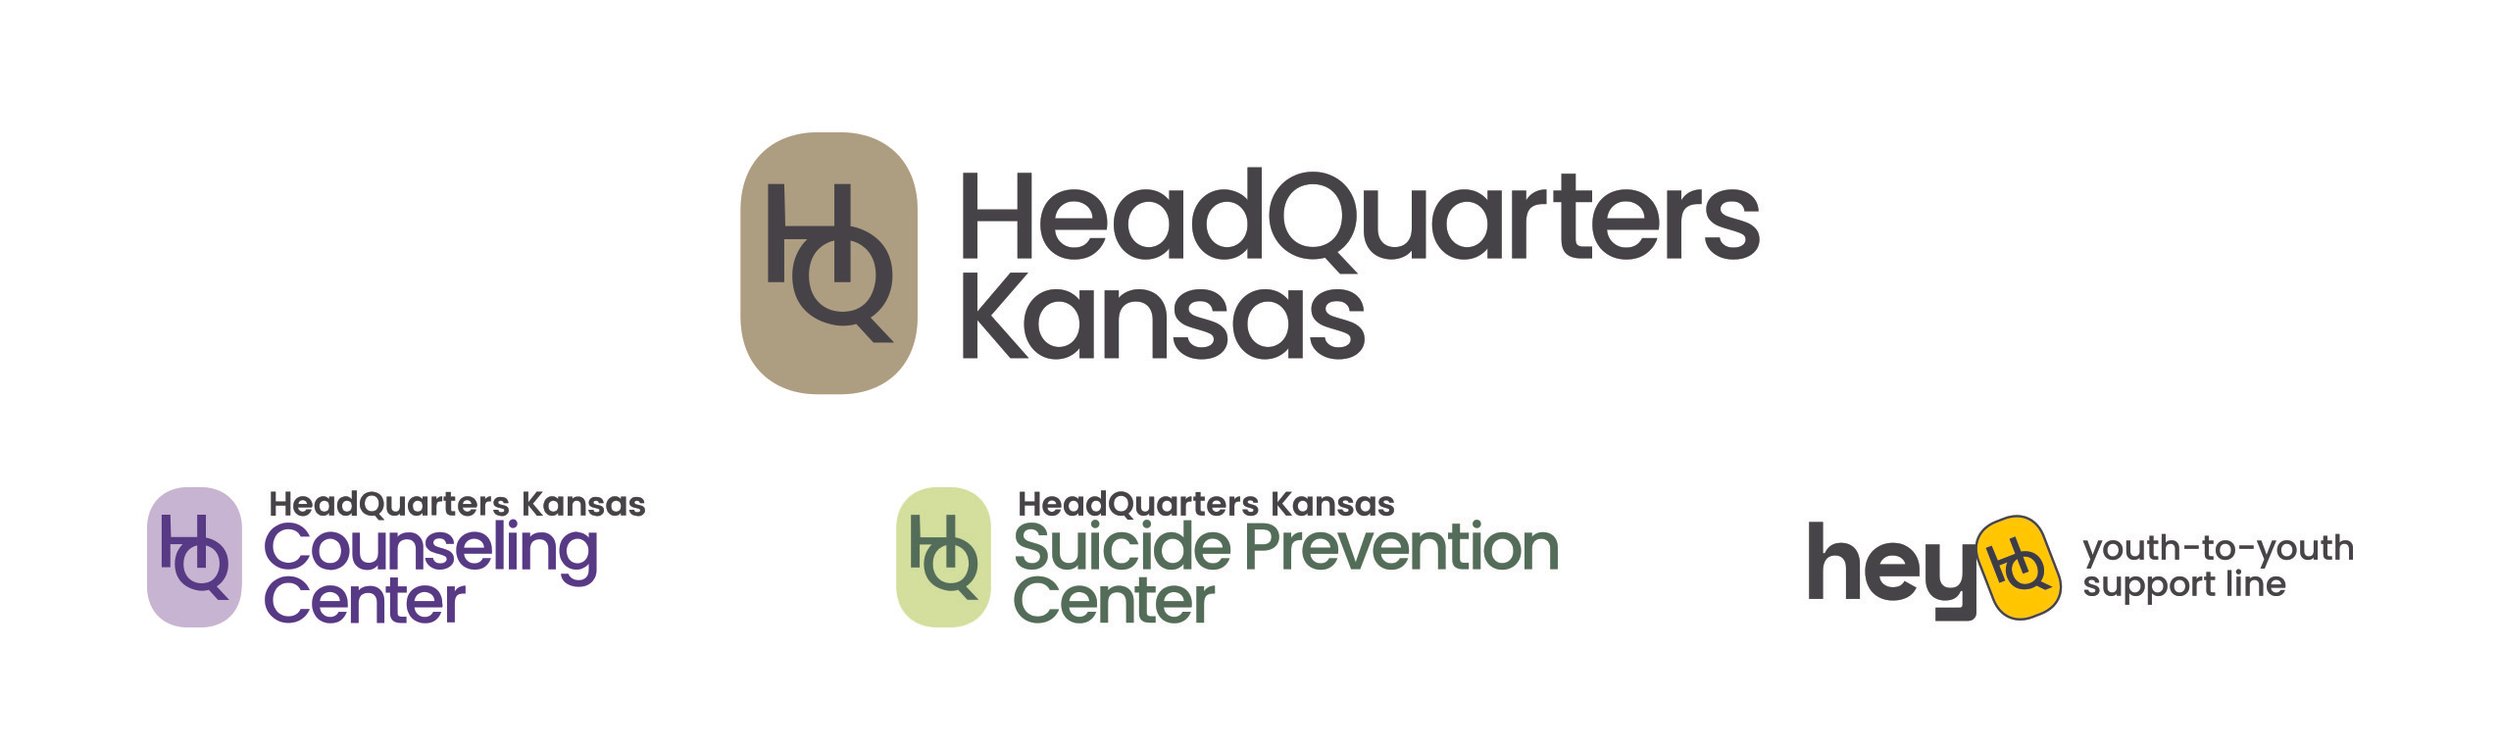 HeadQuarters Kansas